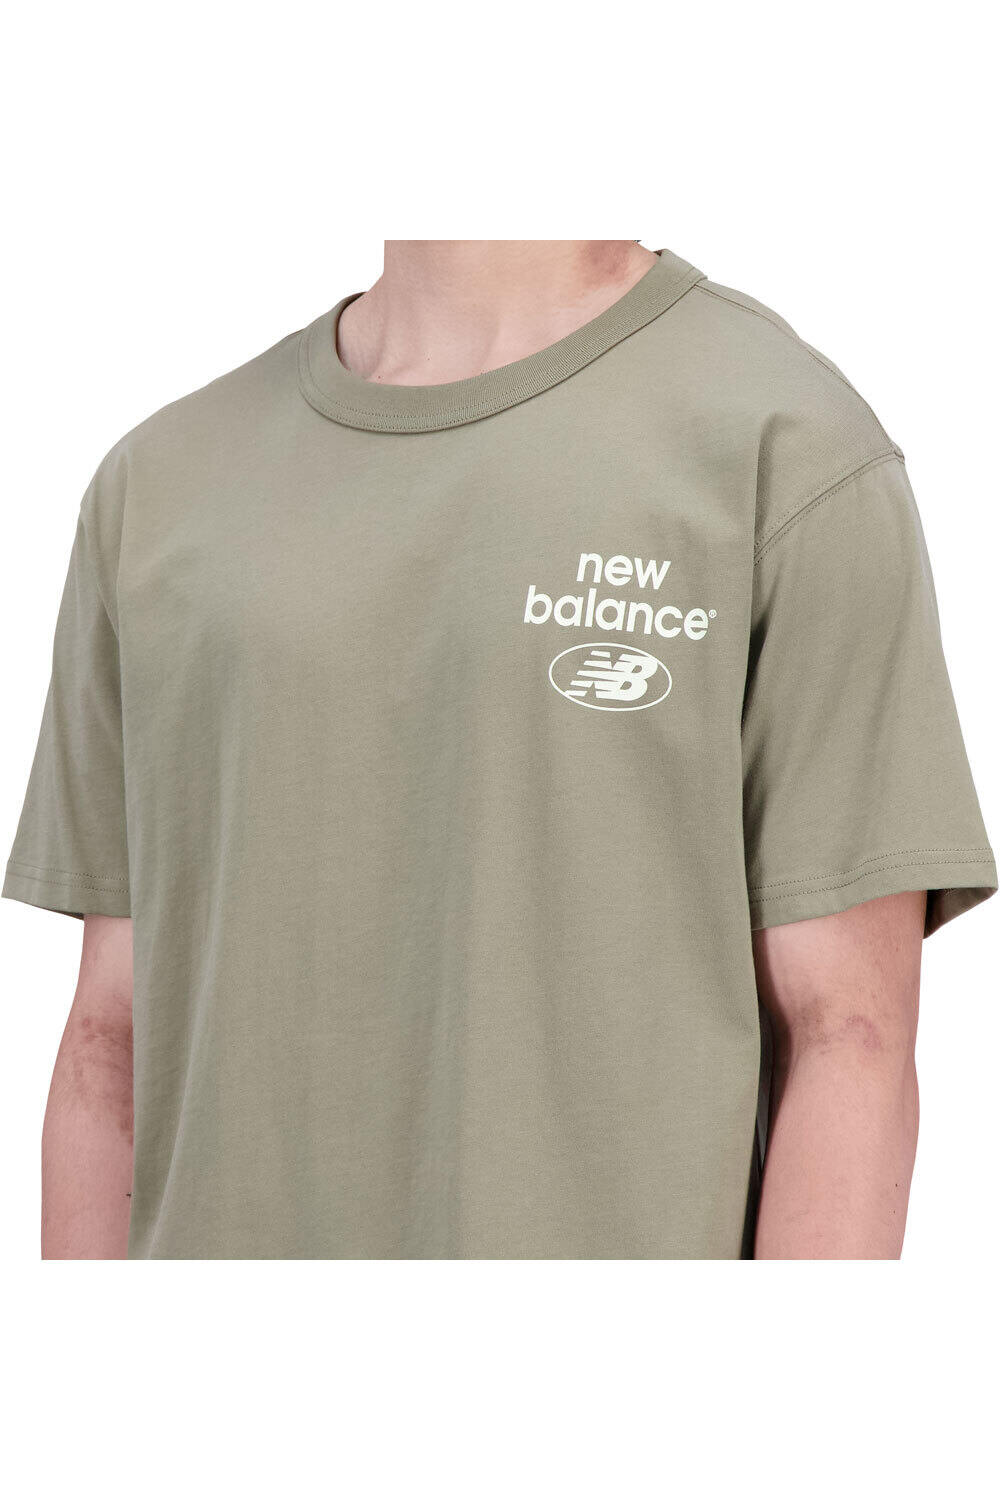 New Balance camiseta manga corta hombre Essentials Reimagined 03